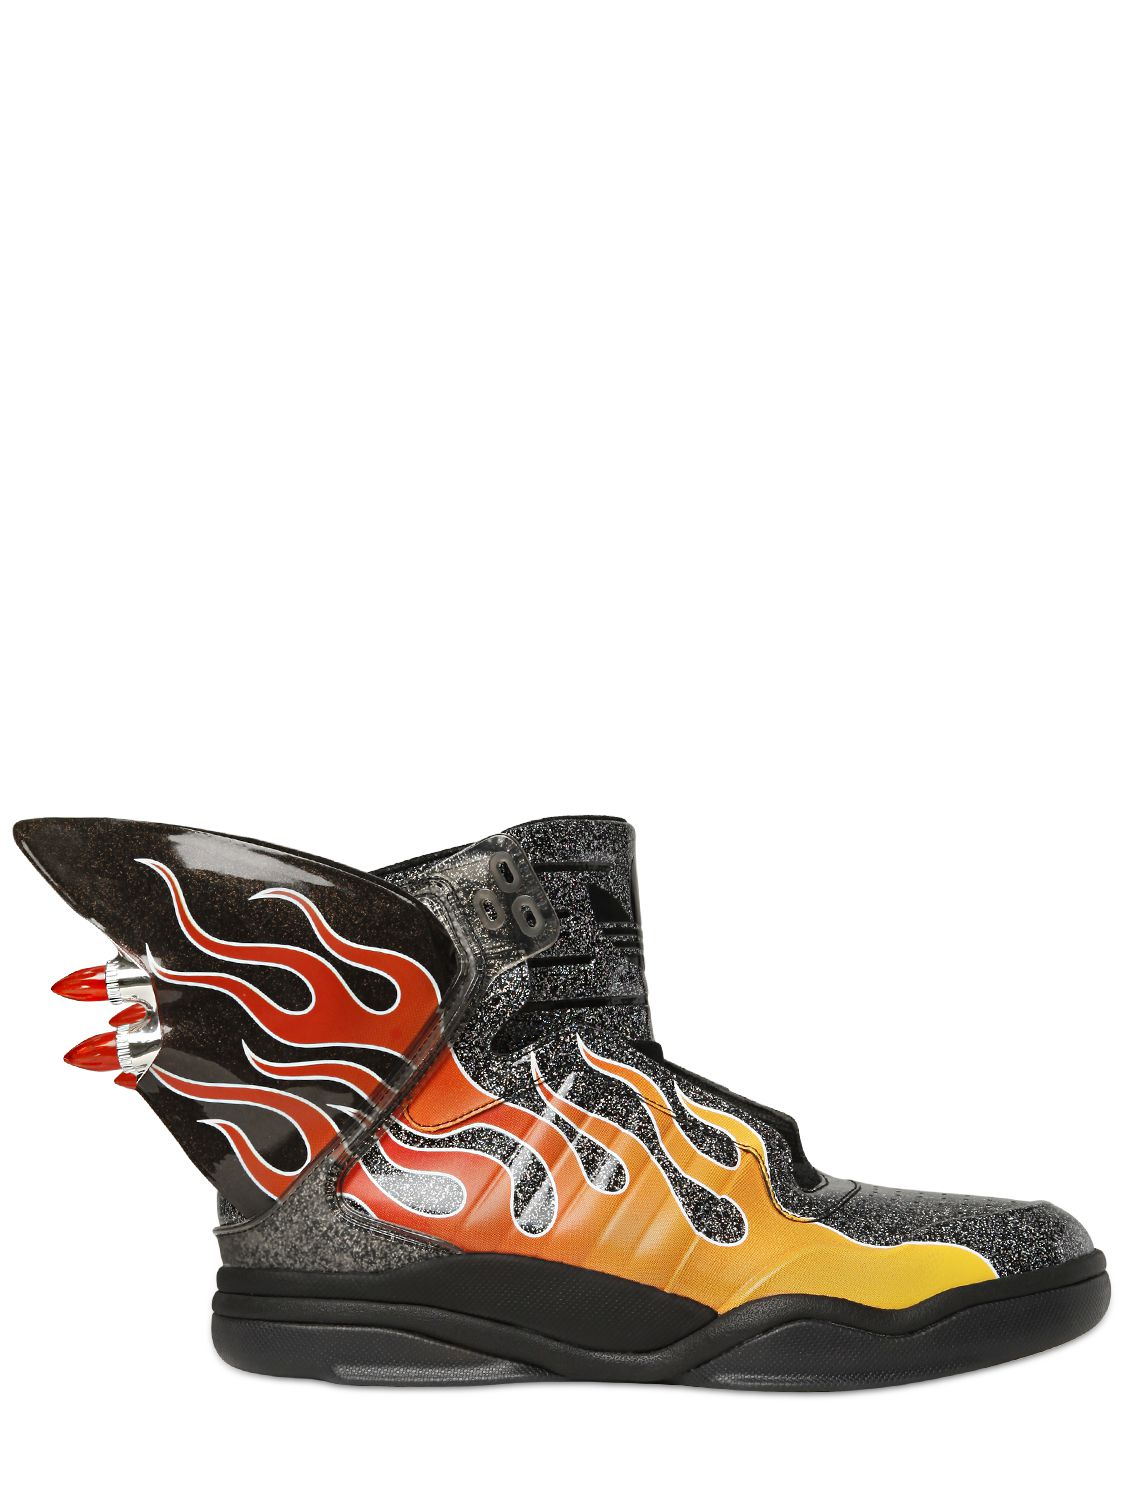 Jeremy Scott Flame Shoes on Sale, SAVE 52% - online-pmo.com